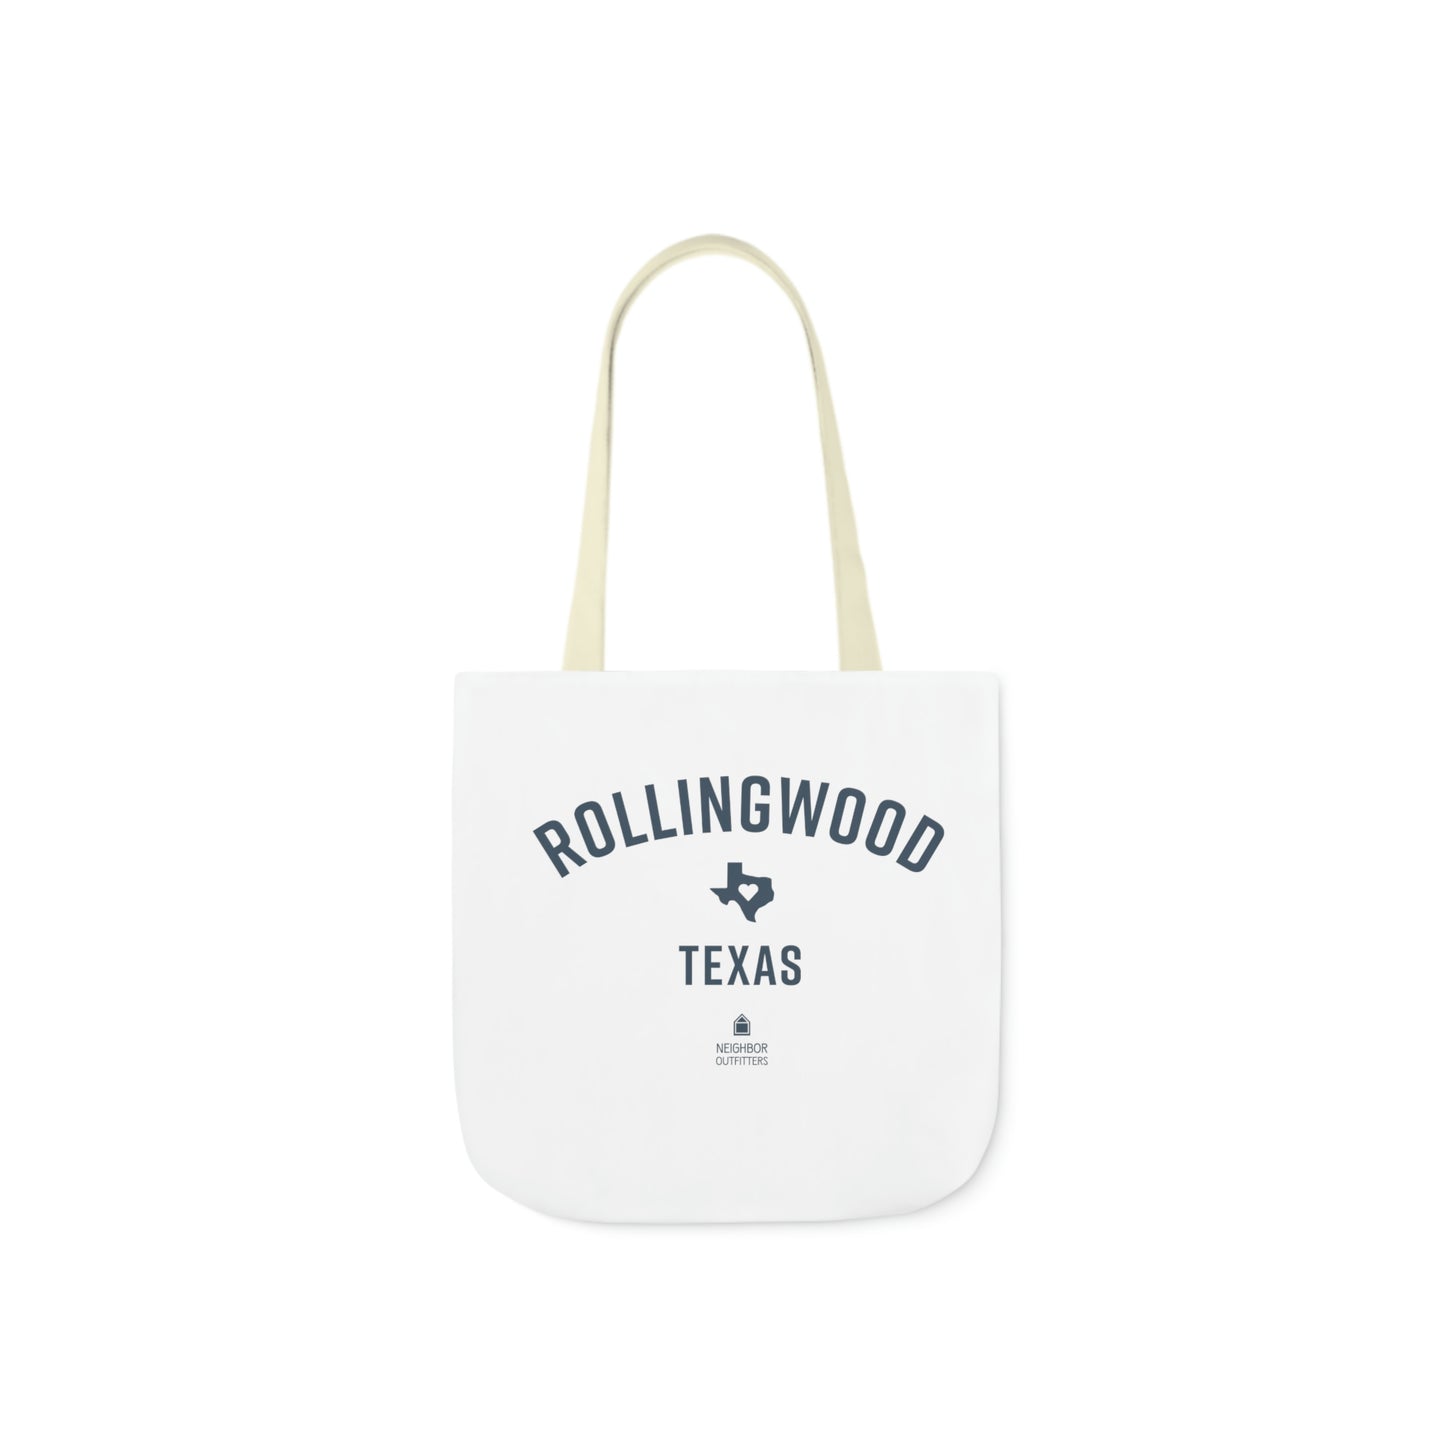 Rollingwood Tote Bag - "Full Hearts"